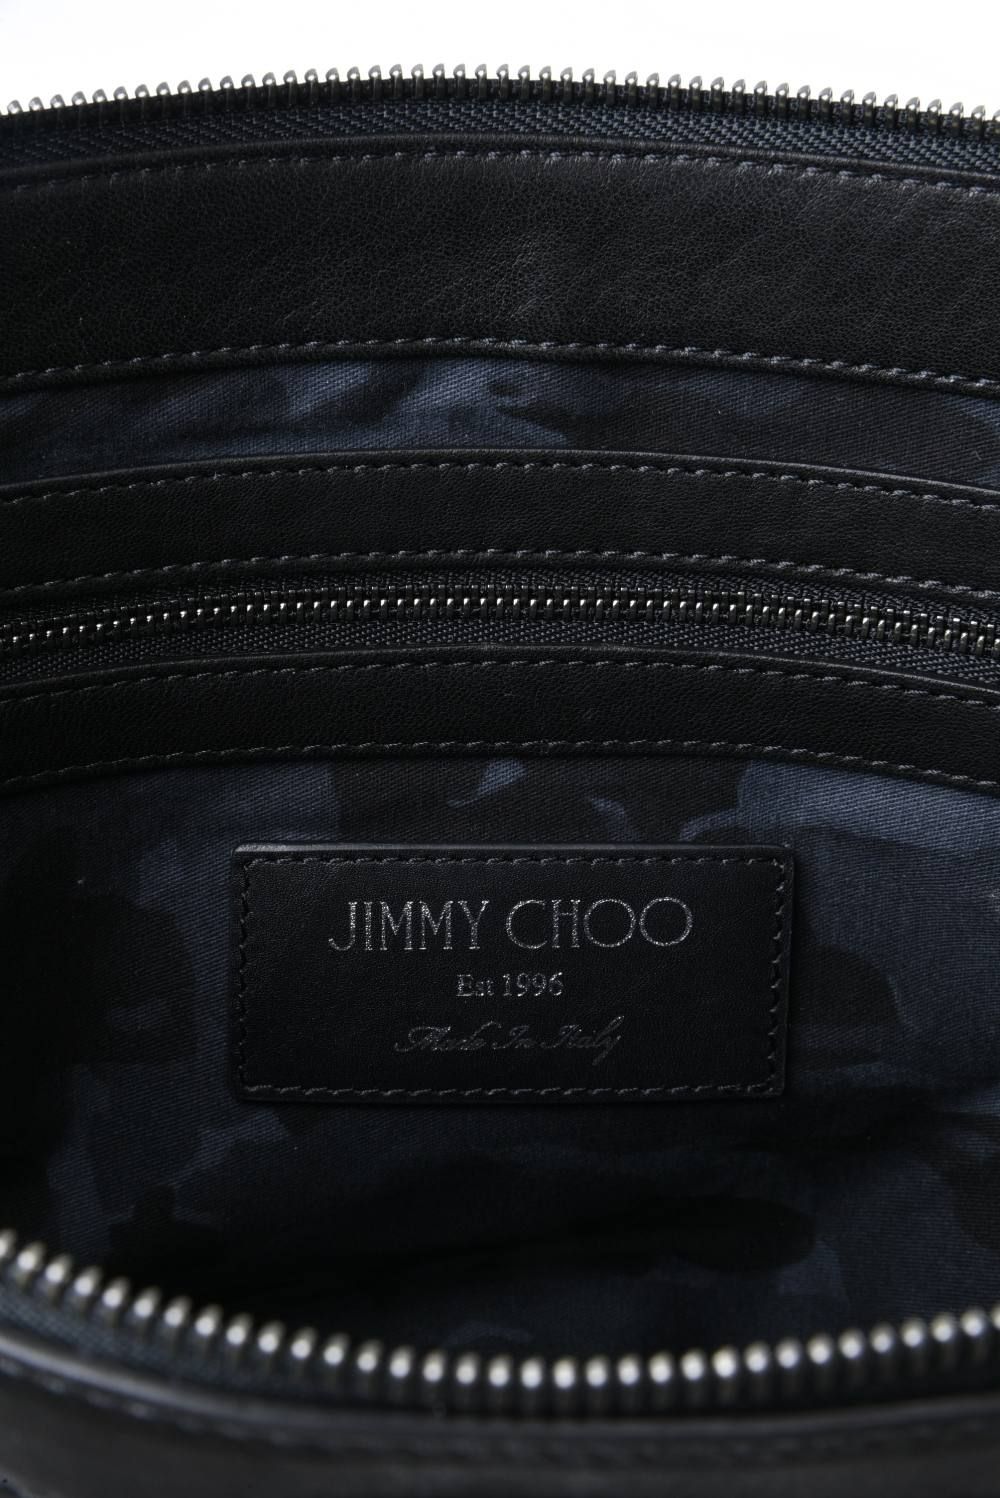 JIMMY CHOO - DEREK-LTR / スタースタッズ レザー クラッチバッグ ...